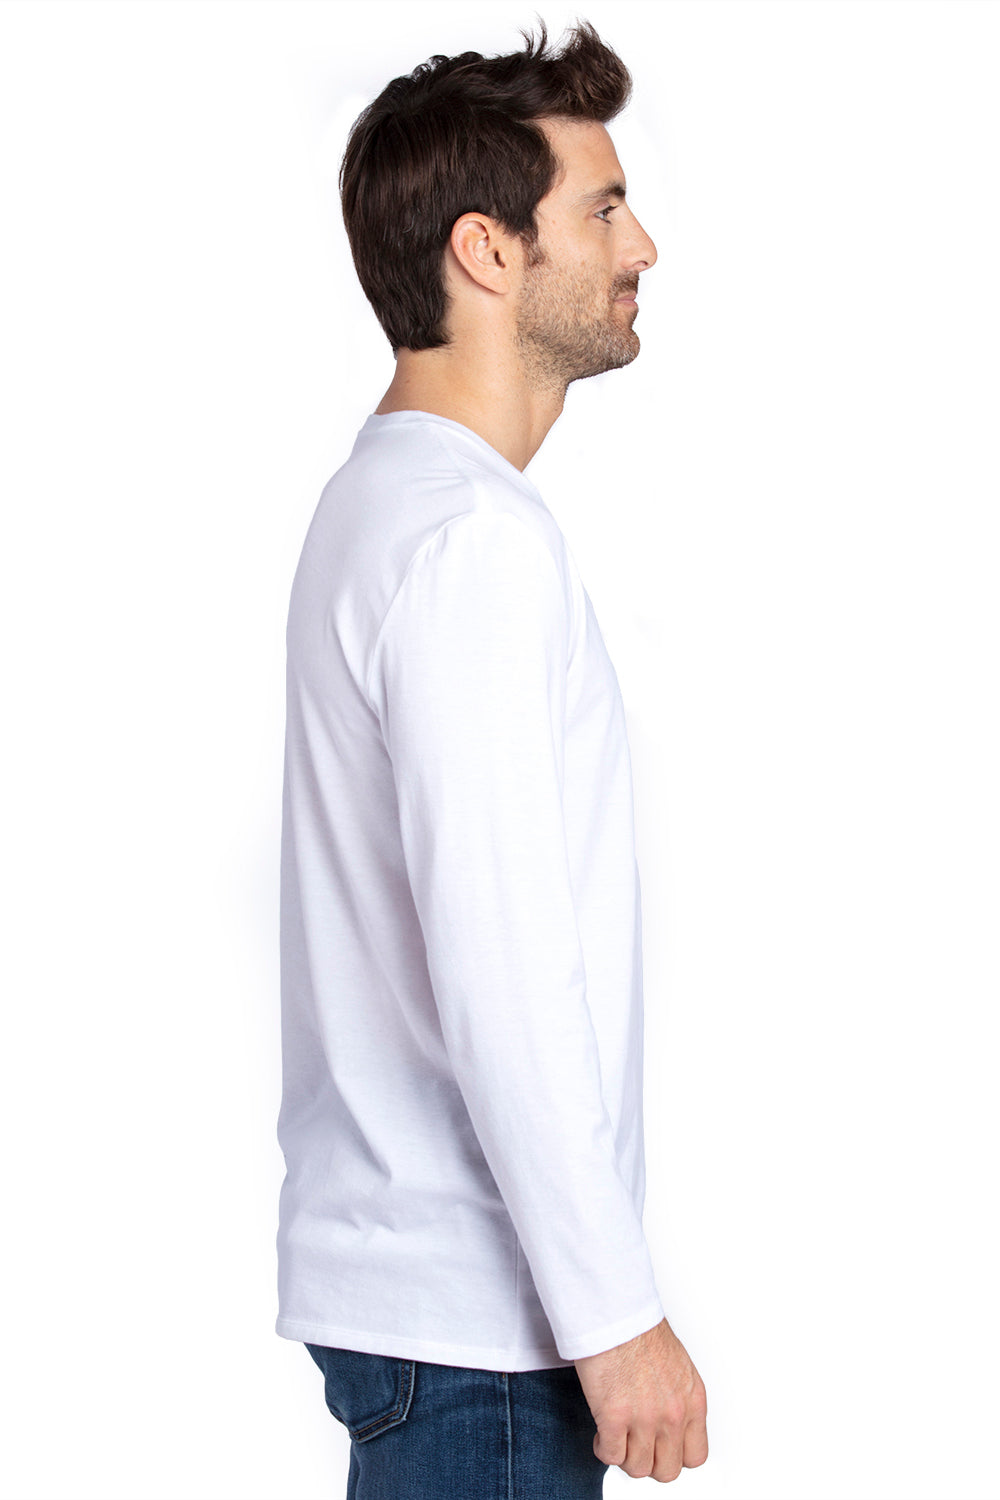 Threadfast Apparel 100LS Mens Ultimate Long Sleeve Crewneck T-Shirt White Side